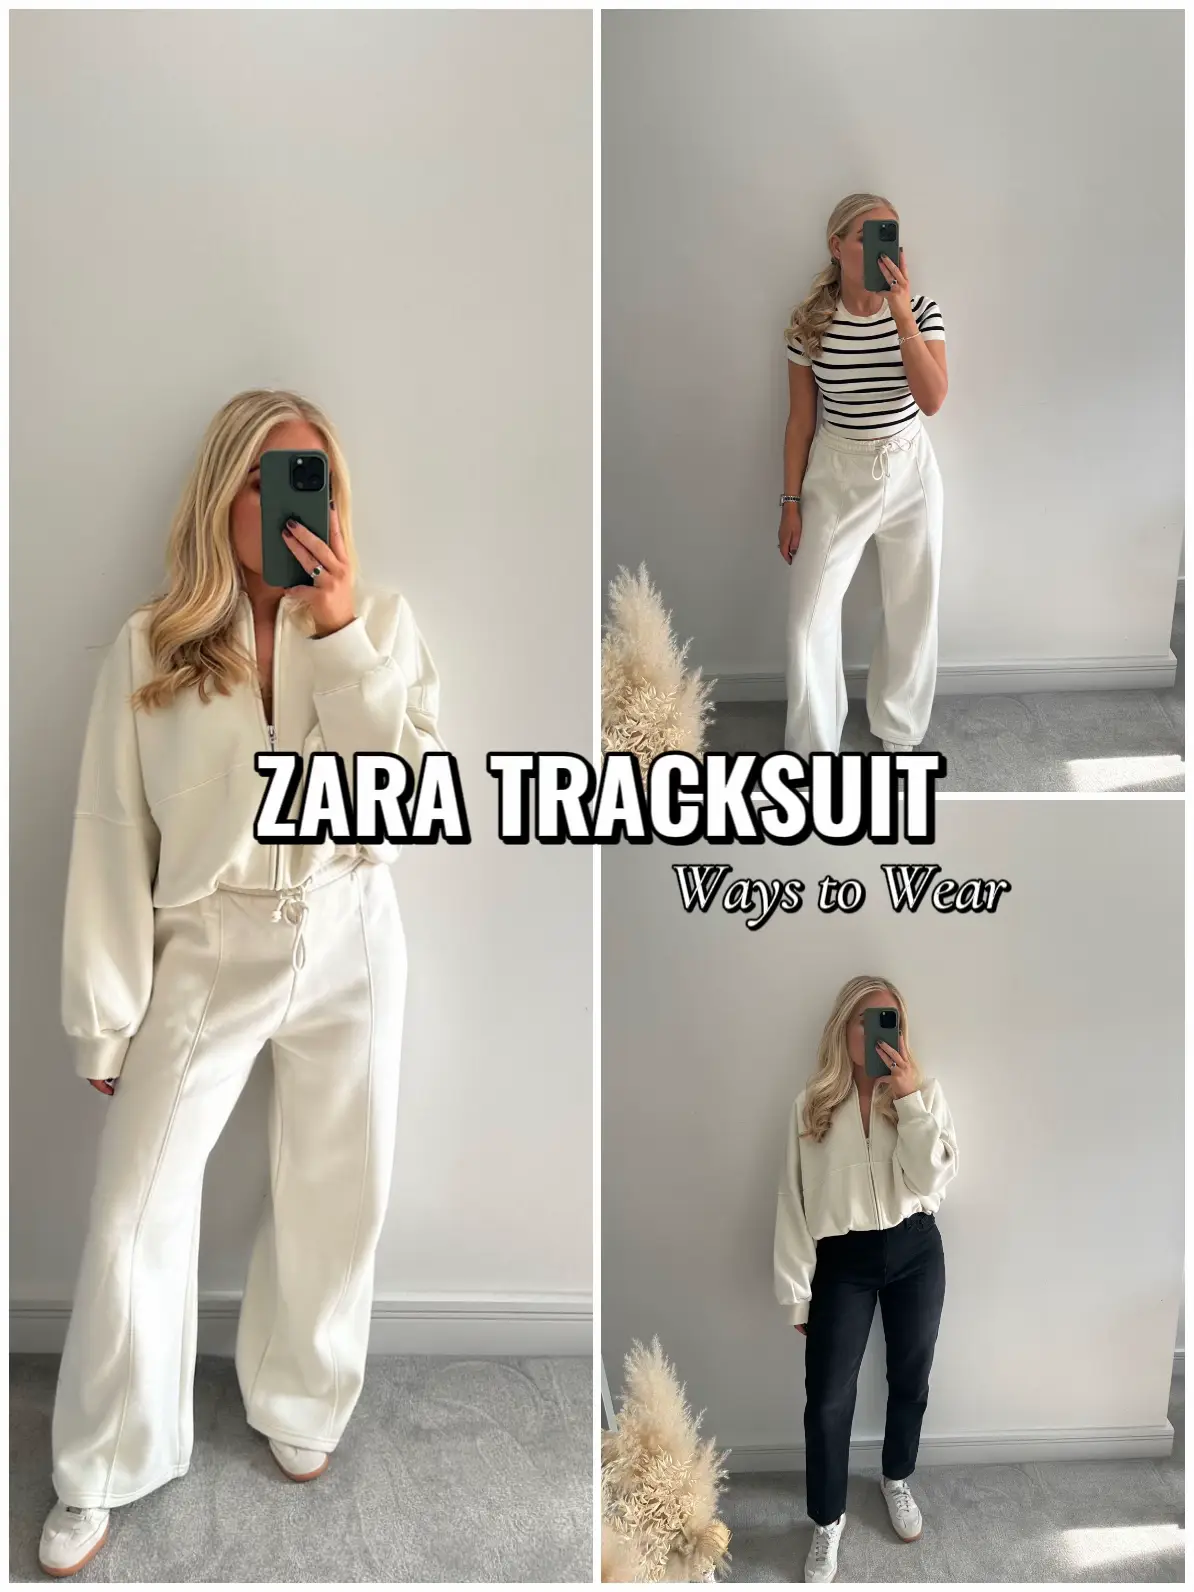 Zara pants joggers size 30 small